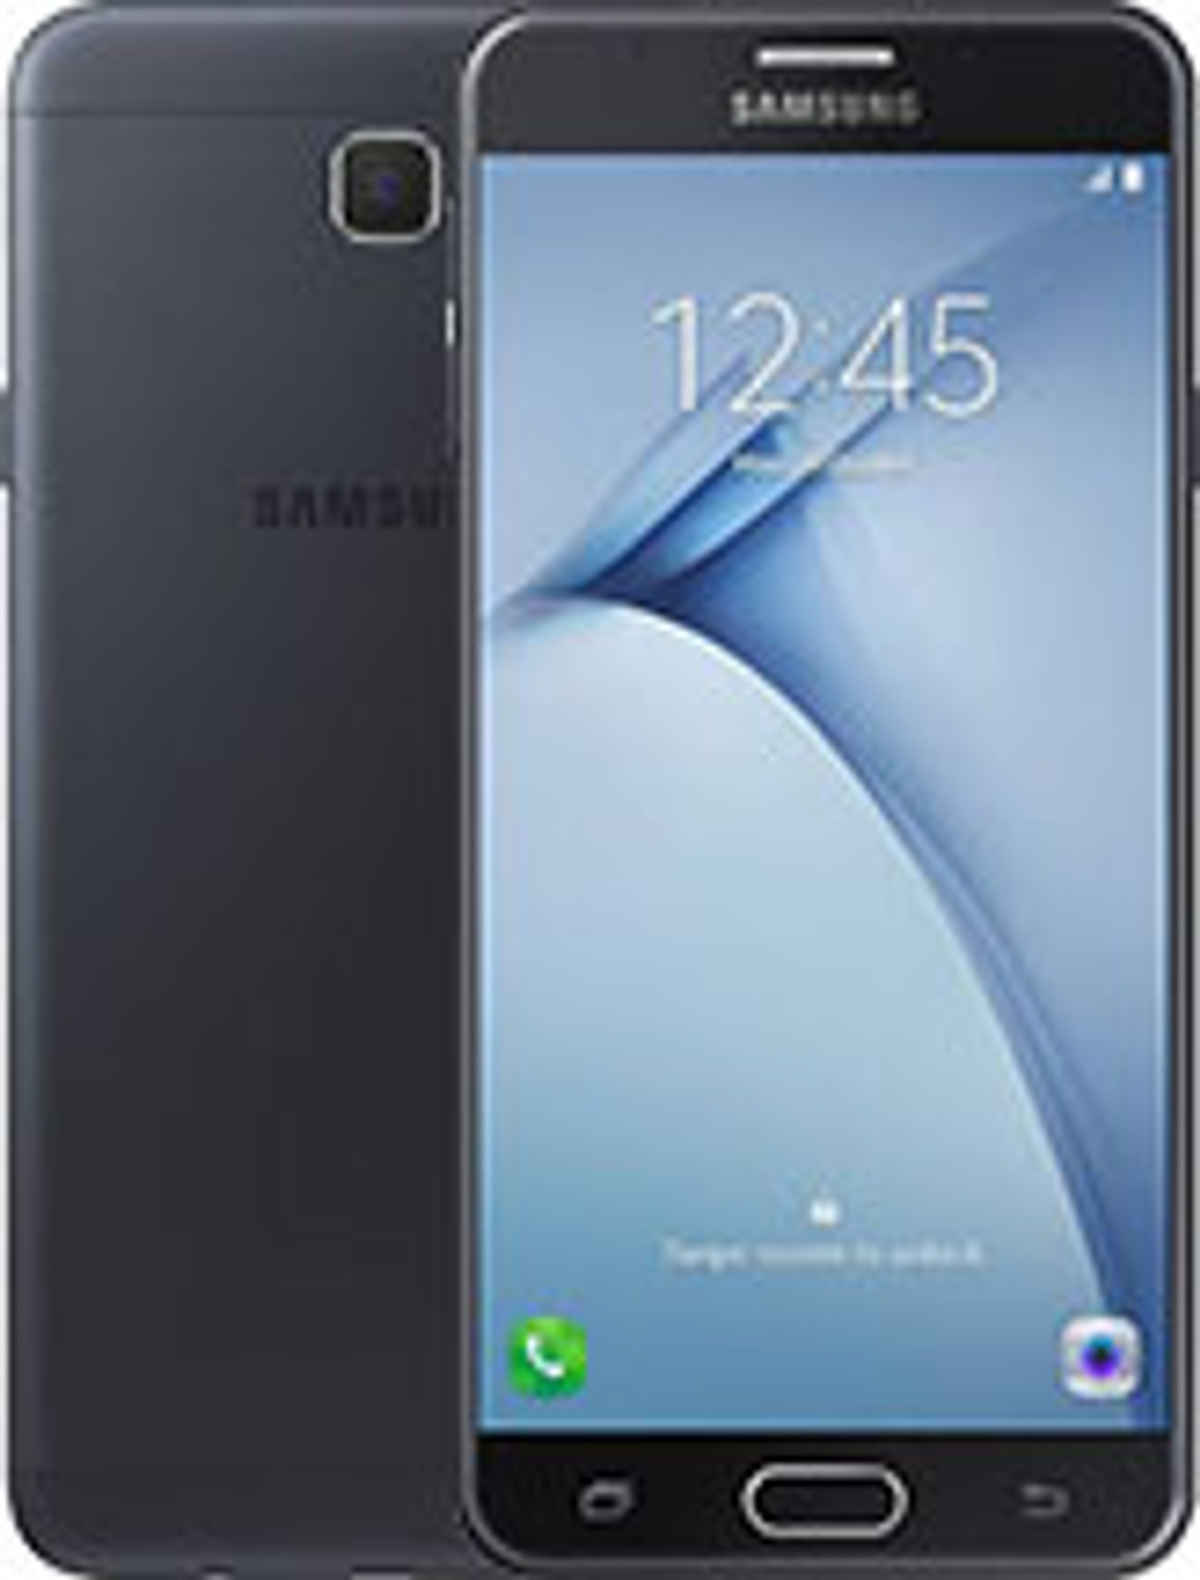 Best Samsung Full Hd Screen Phones In India 17 August 21 Digit In